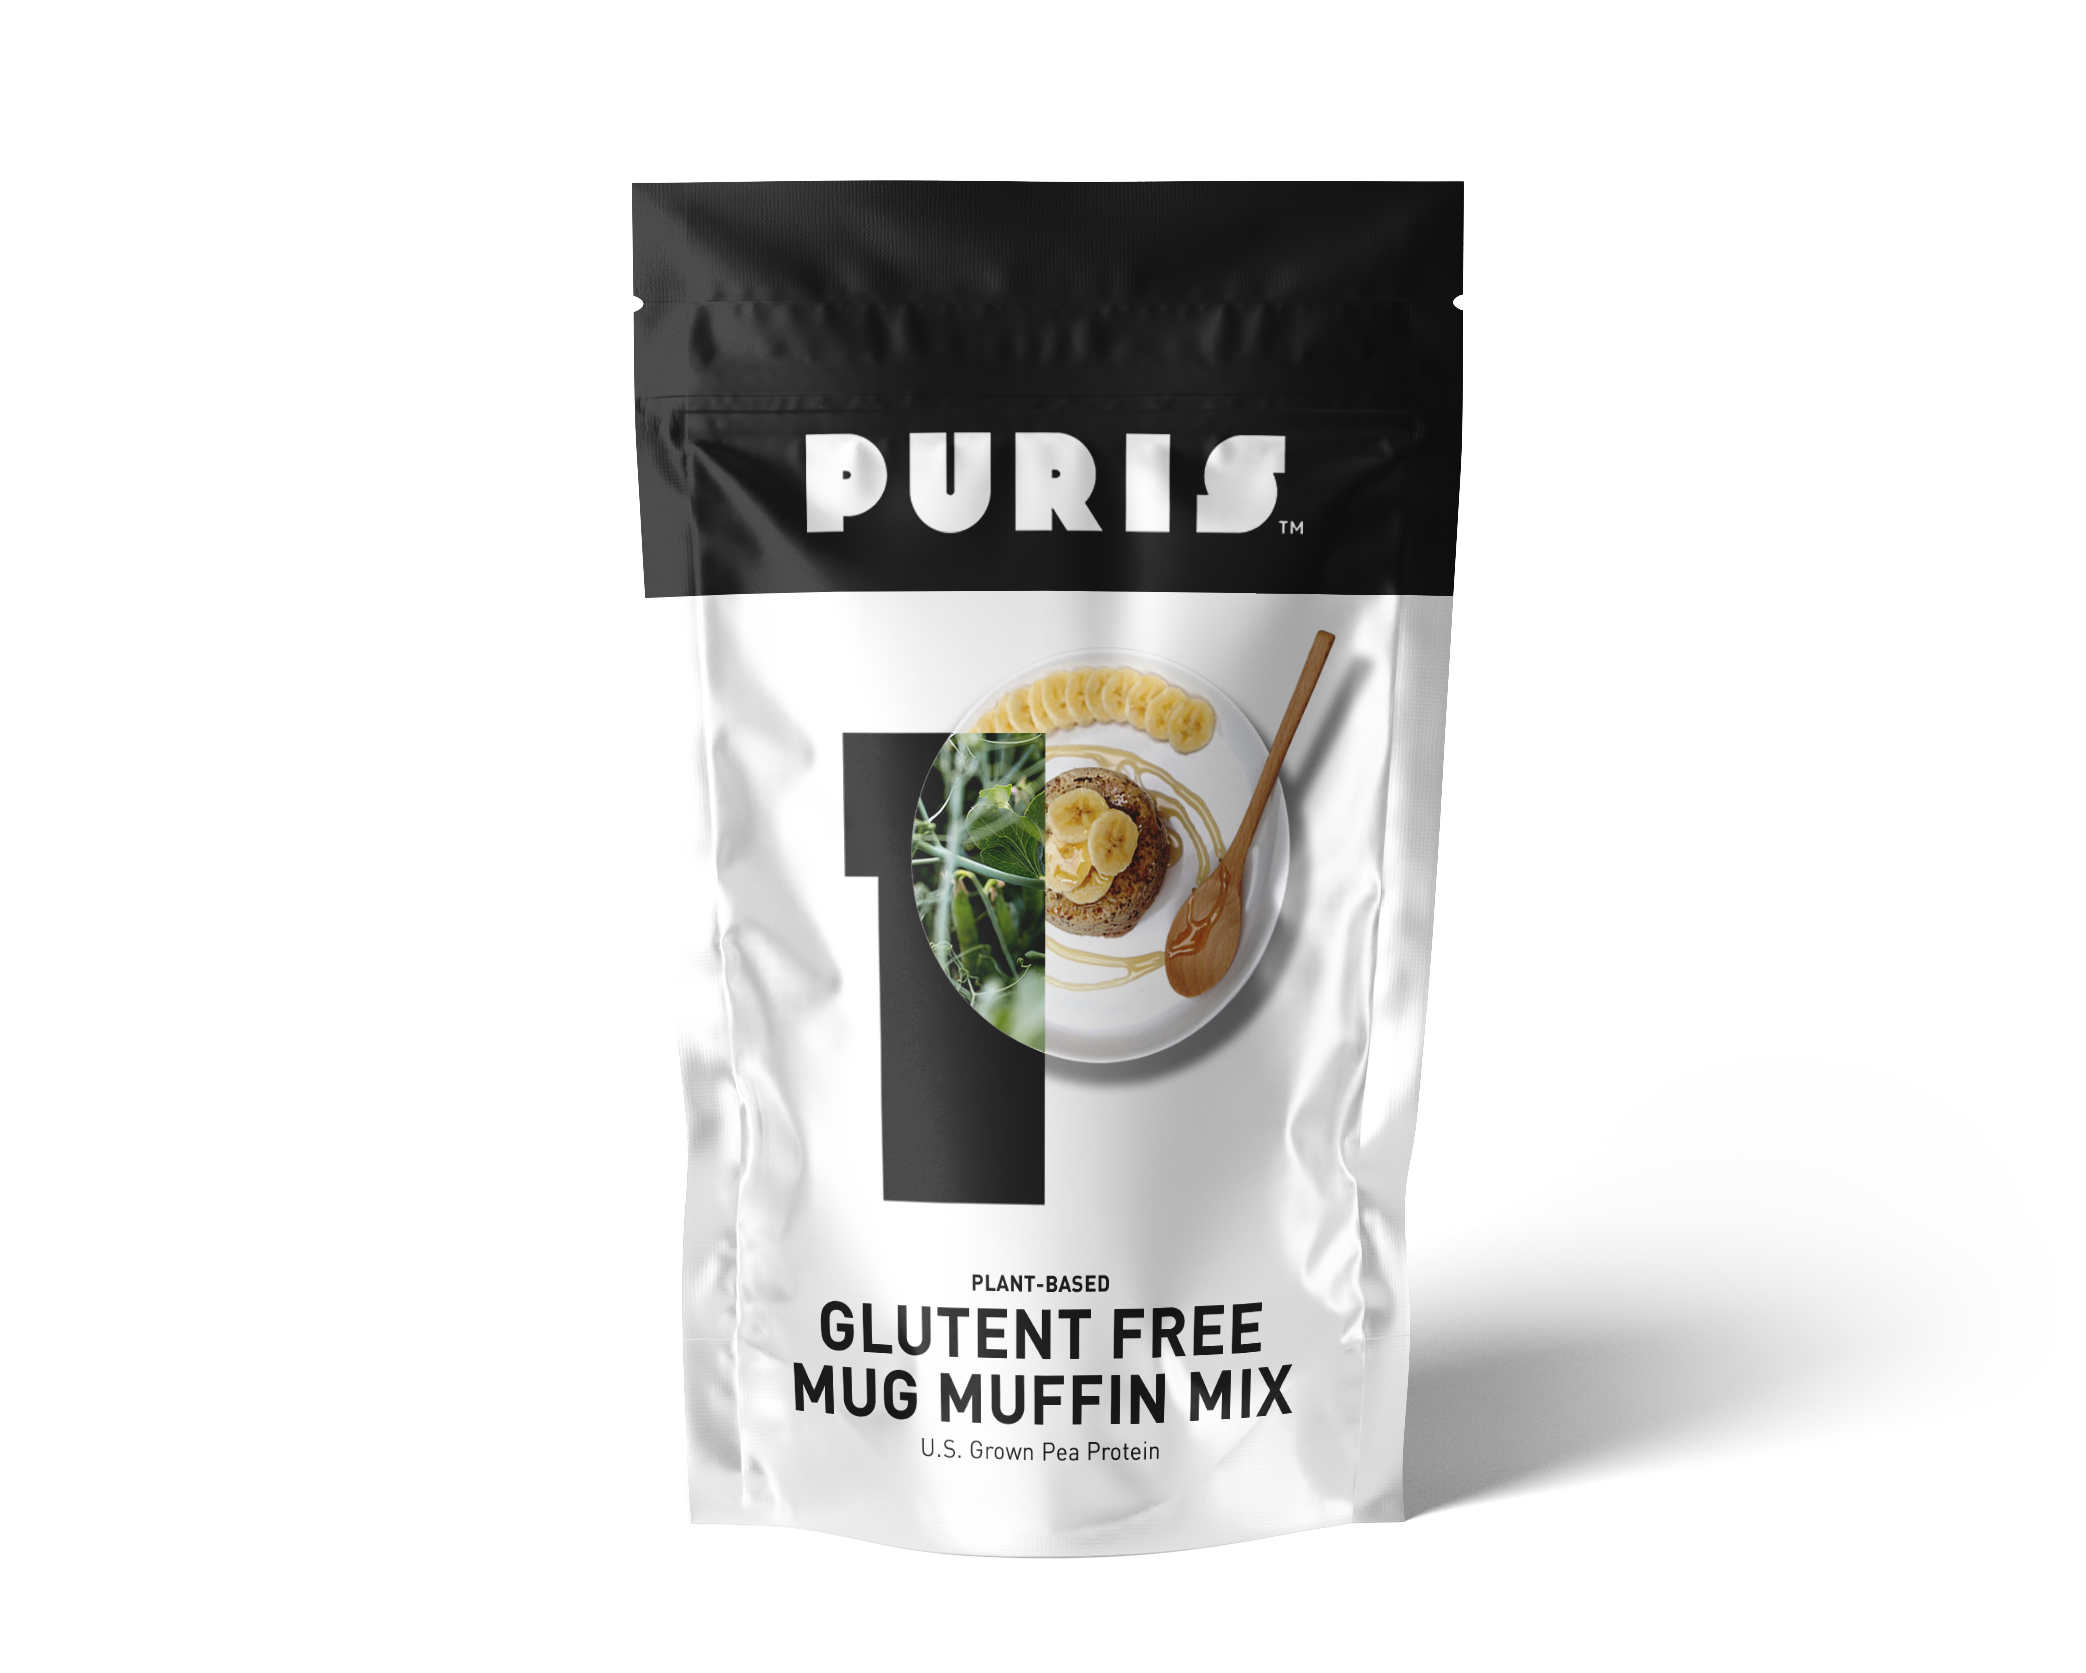 PURIS Gluten-Free Mug Muffin